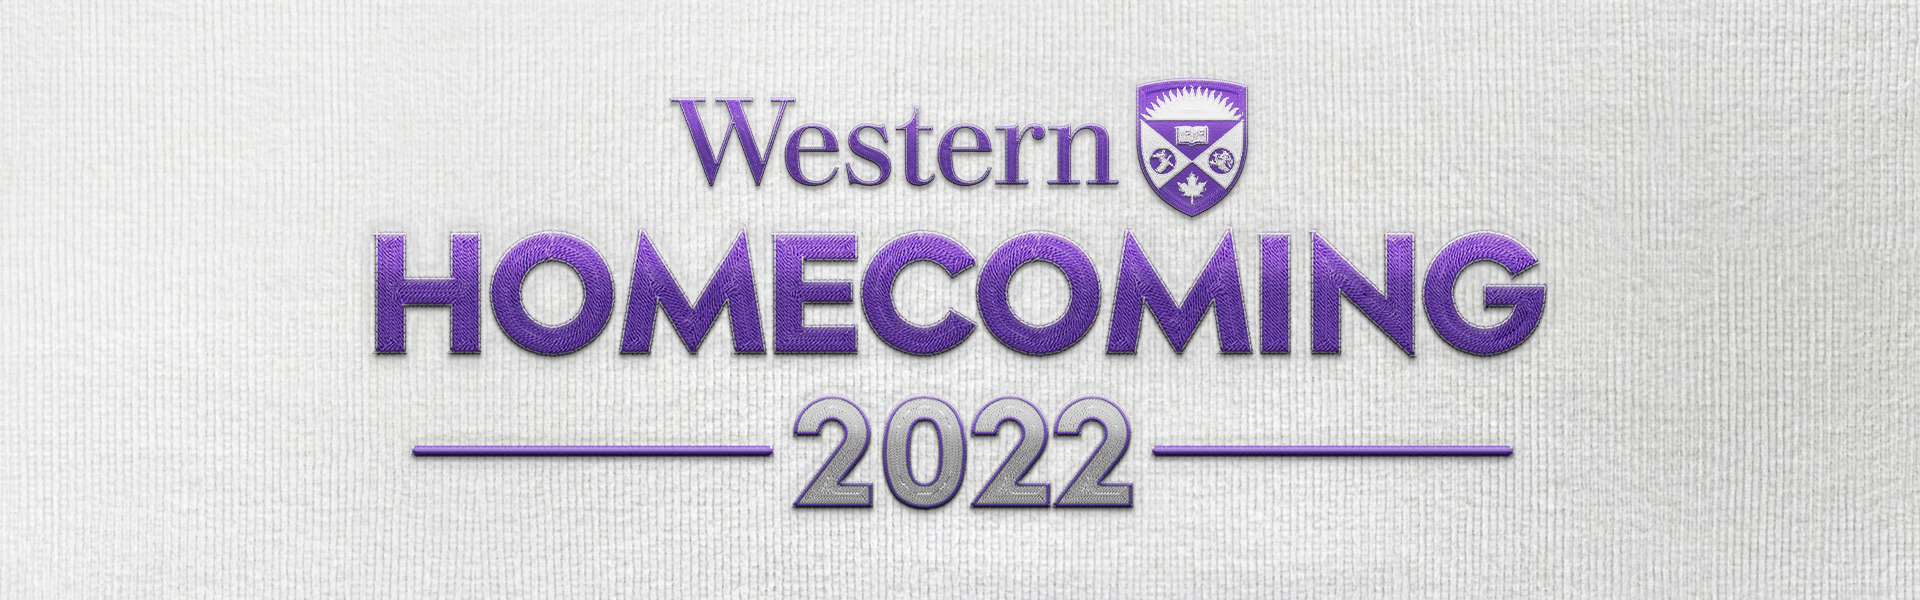 Western Homecoming 2022